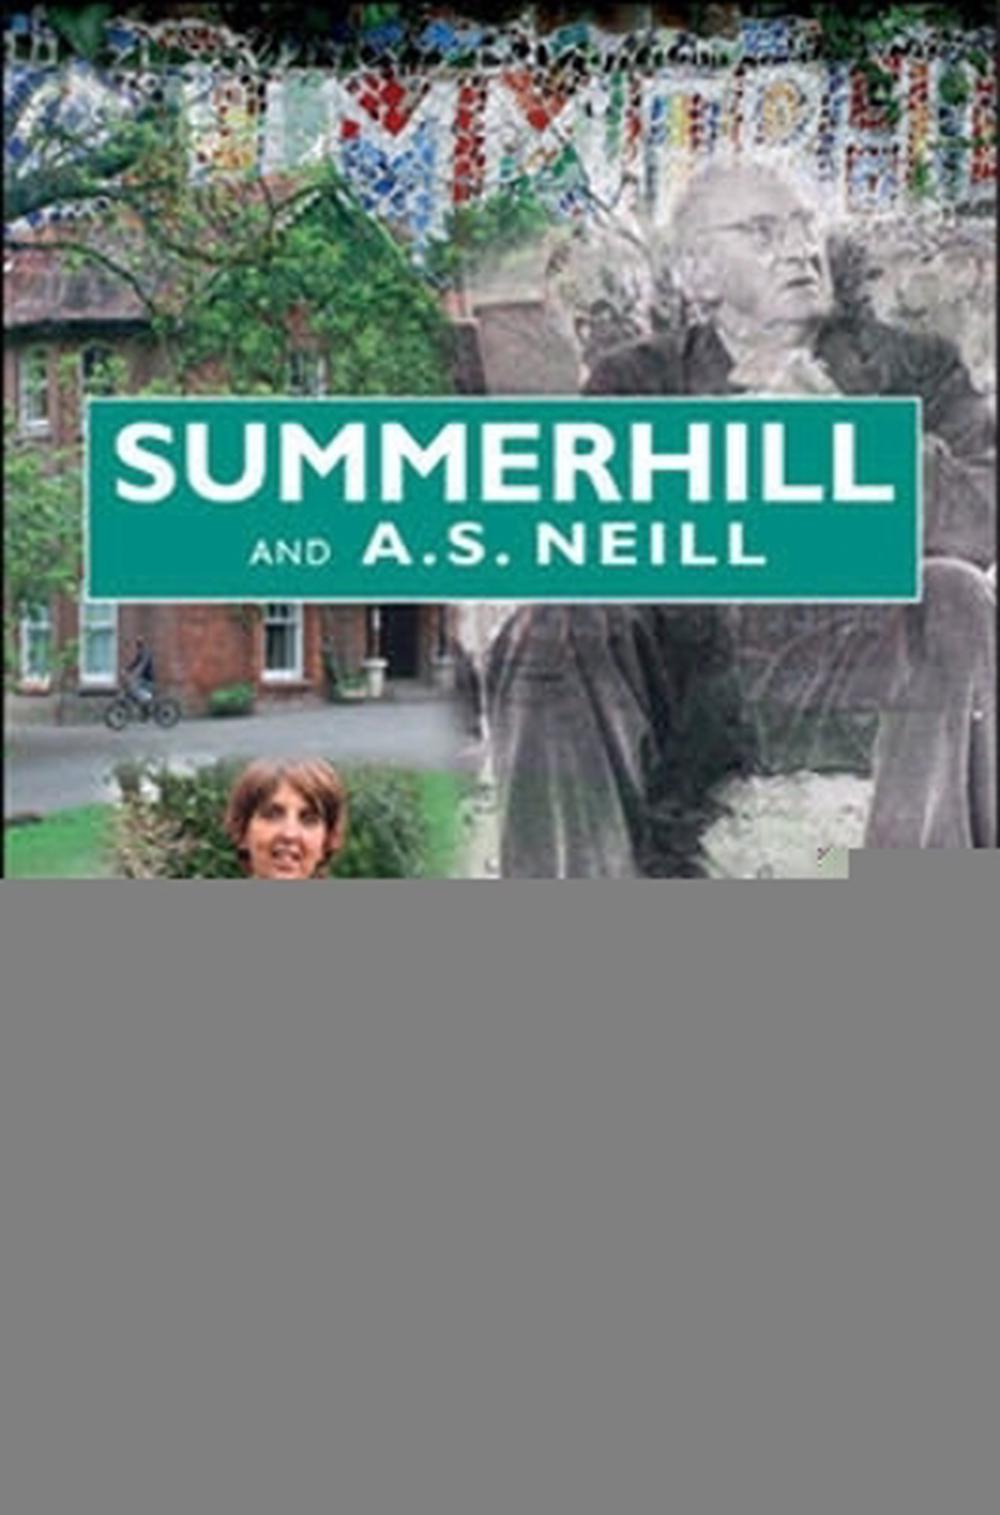 summerhill by as neill